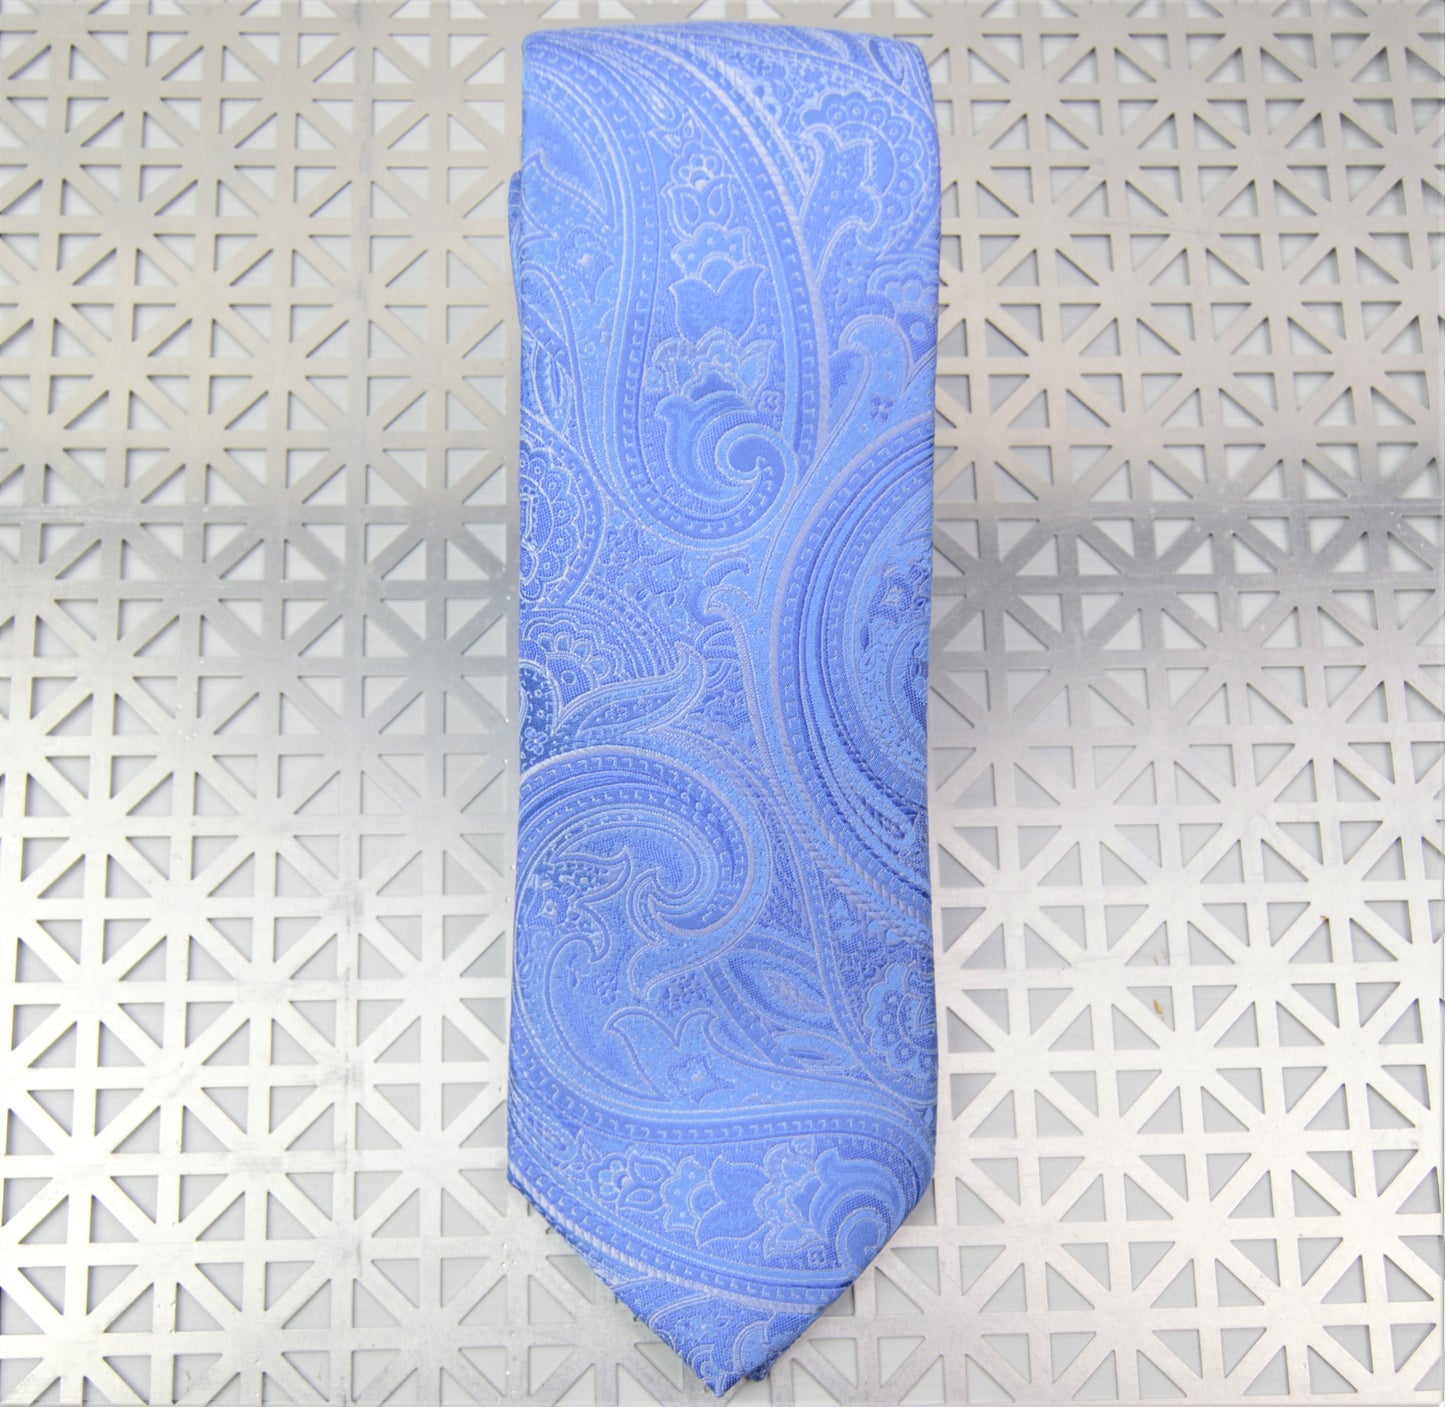 MICHAEL KORS Petal Textured Tie 100% Silk